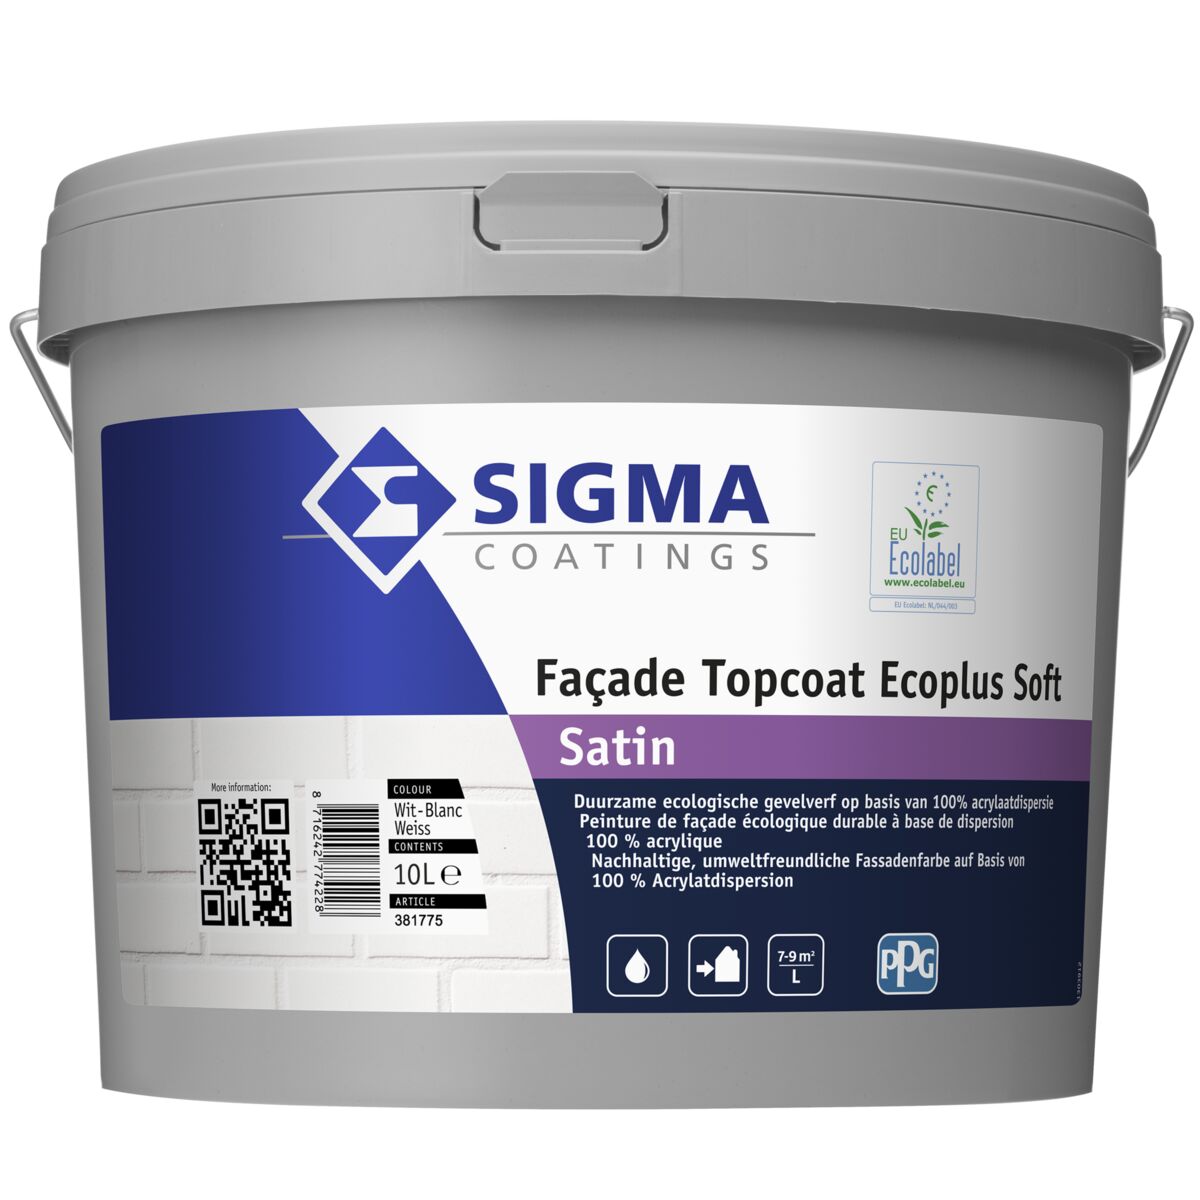 Sigma Façade Topcoat Ecoplus Soft Satin <br><FONT size="4">avant Sigma Façade Ecoplus Soft Satin</FONT>